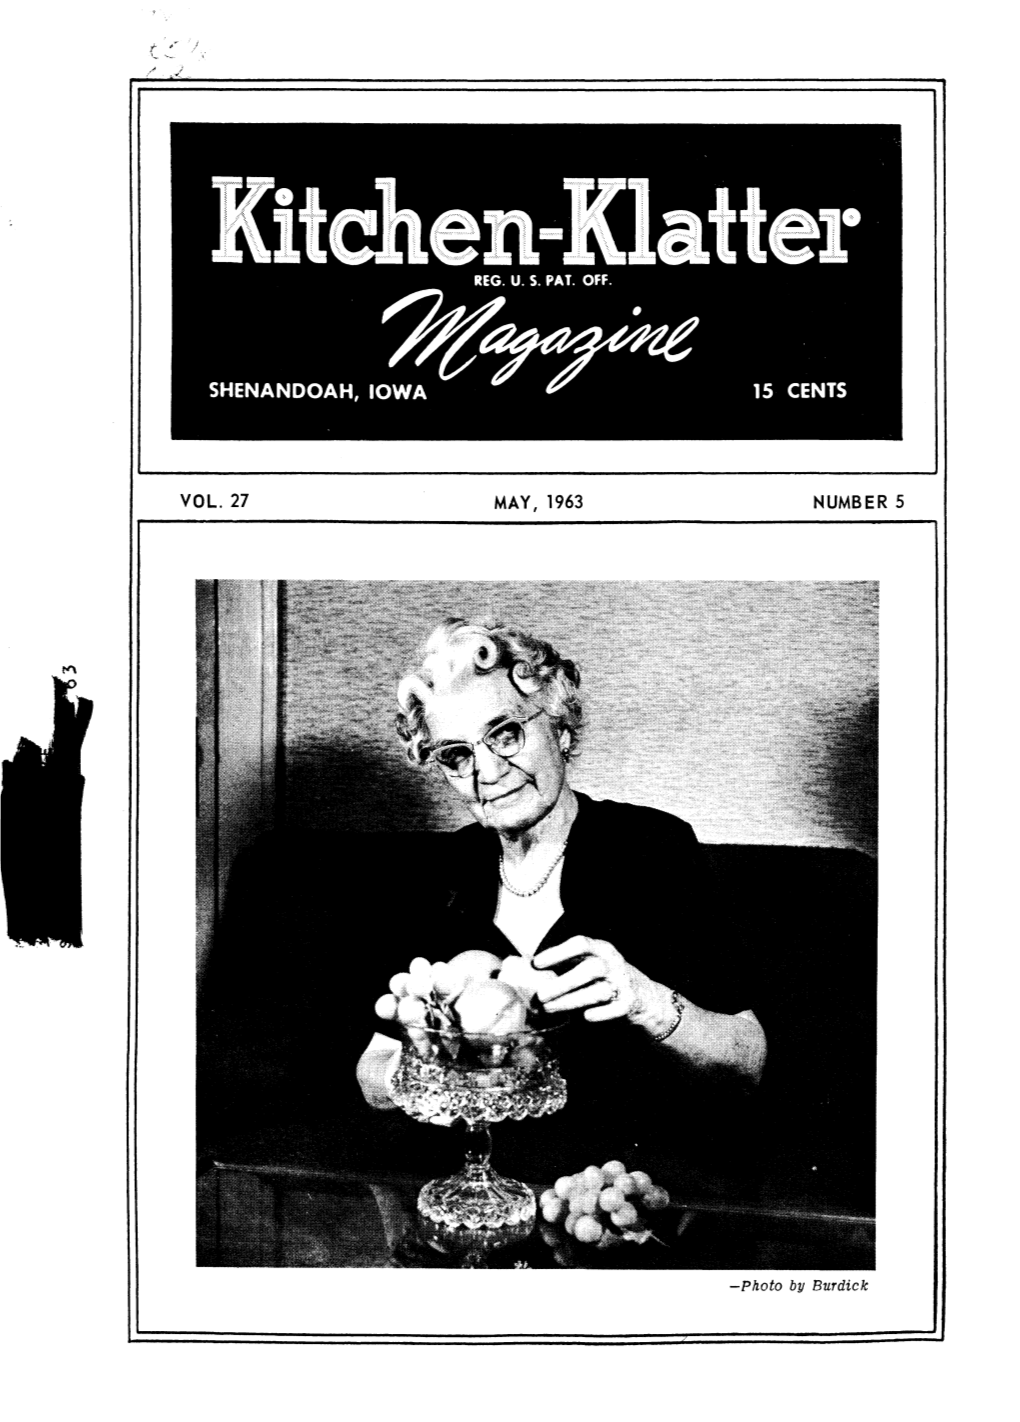 Kitchen-Klatter Magazine, May, 1963